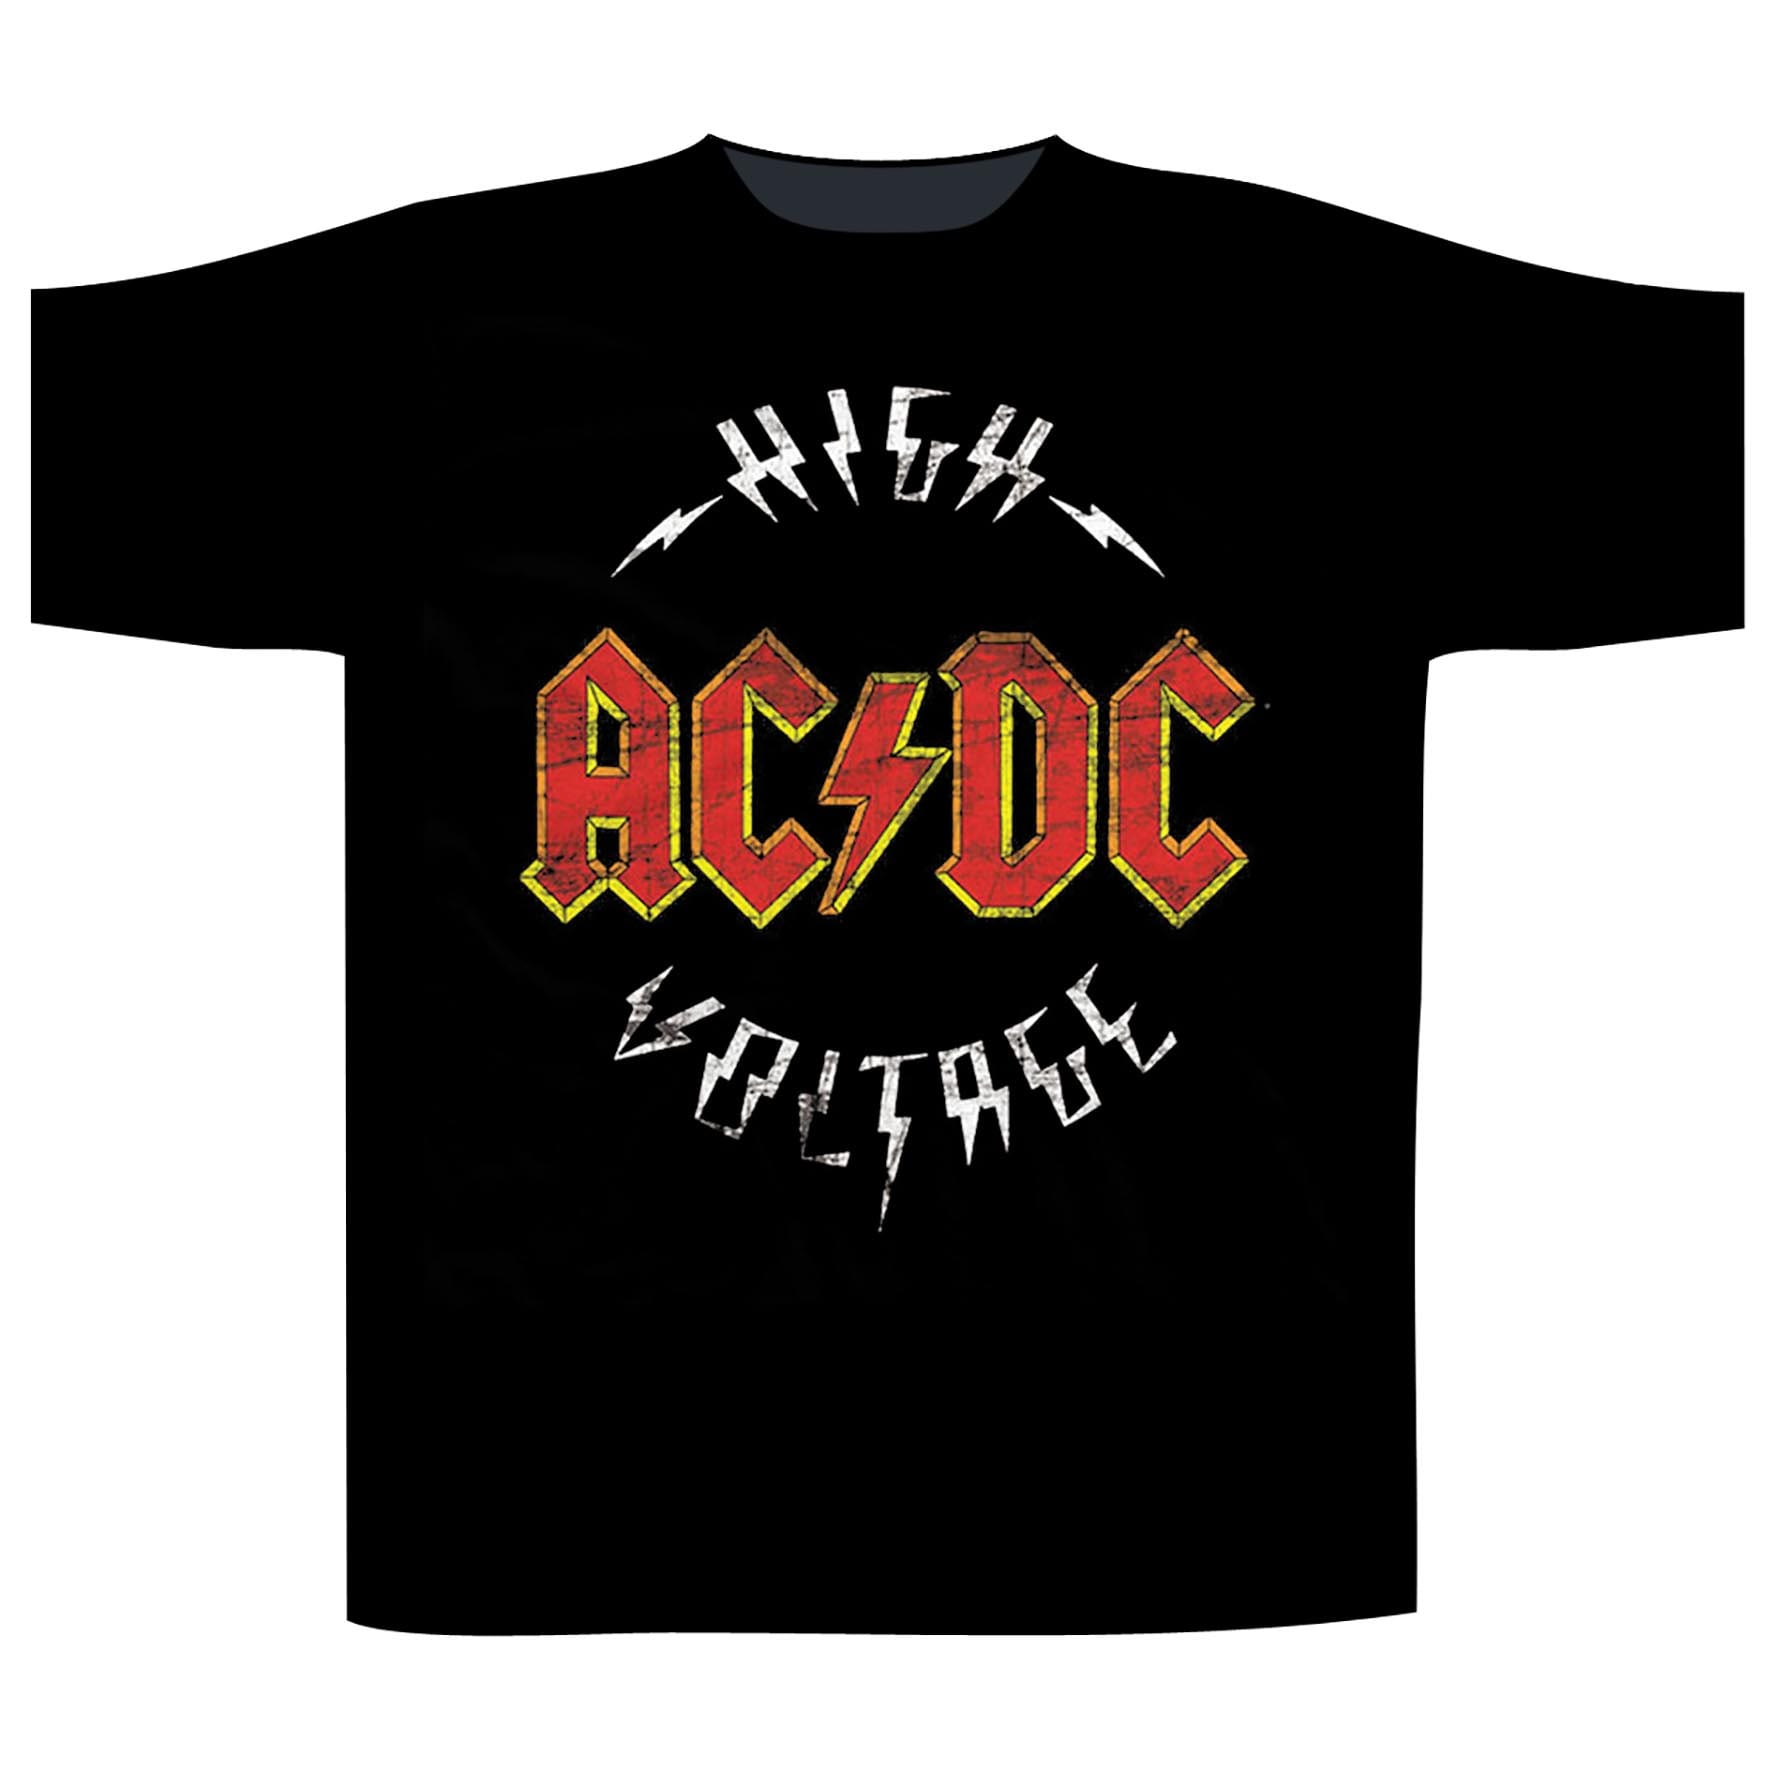 AC/DC 'High Voltage' T-Shirt - HMOL